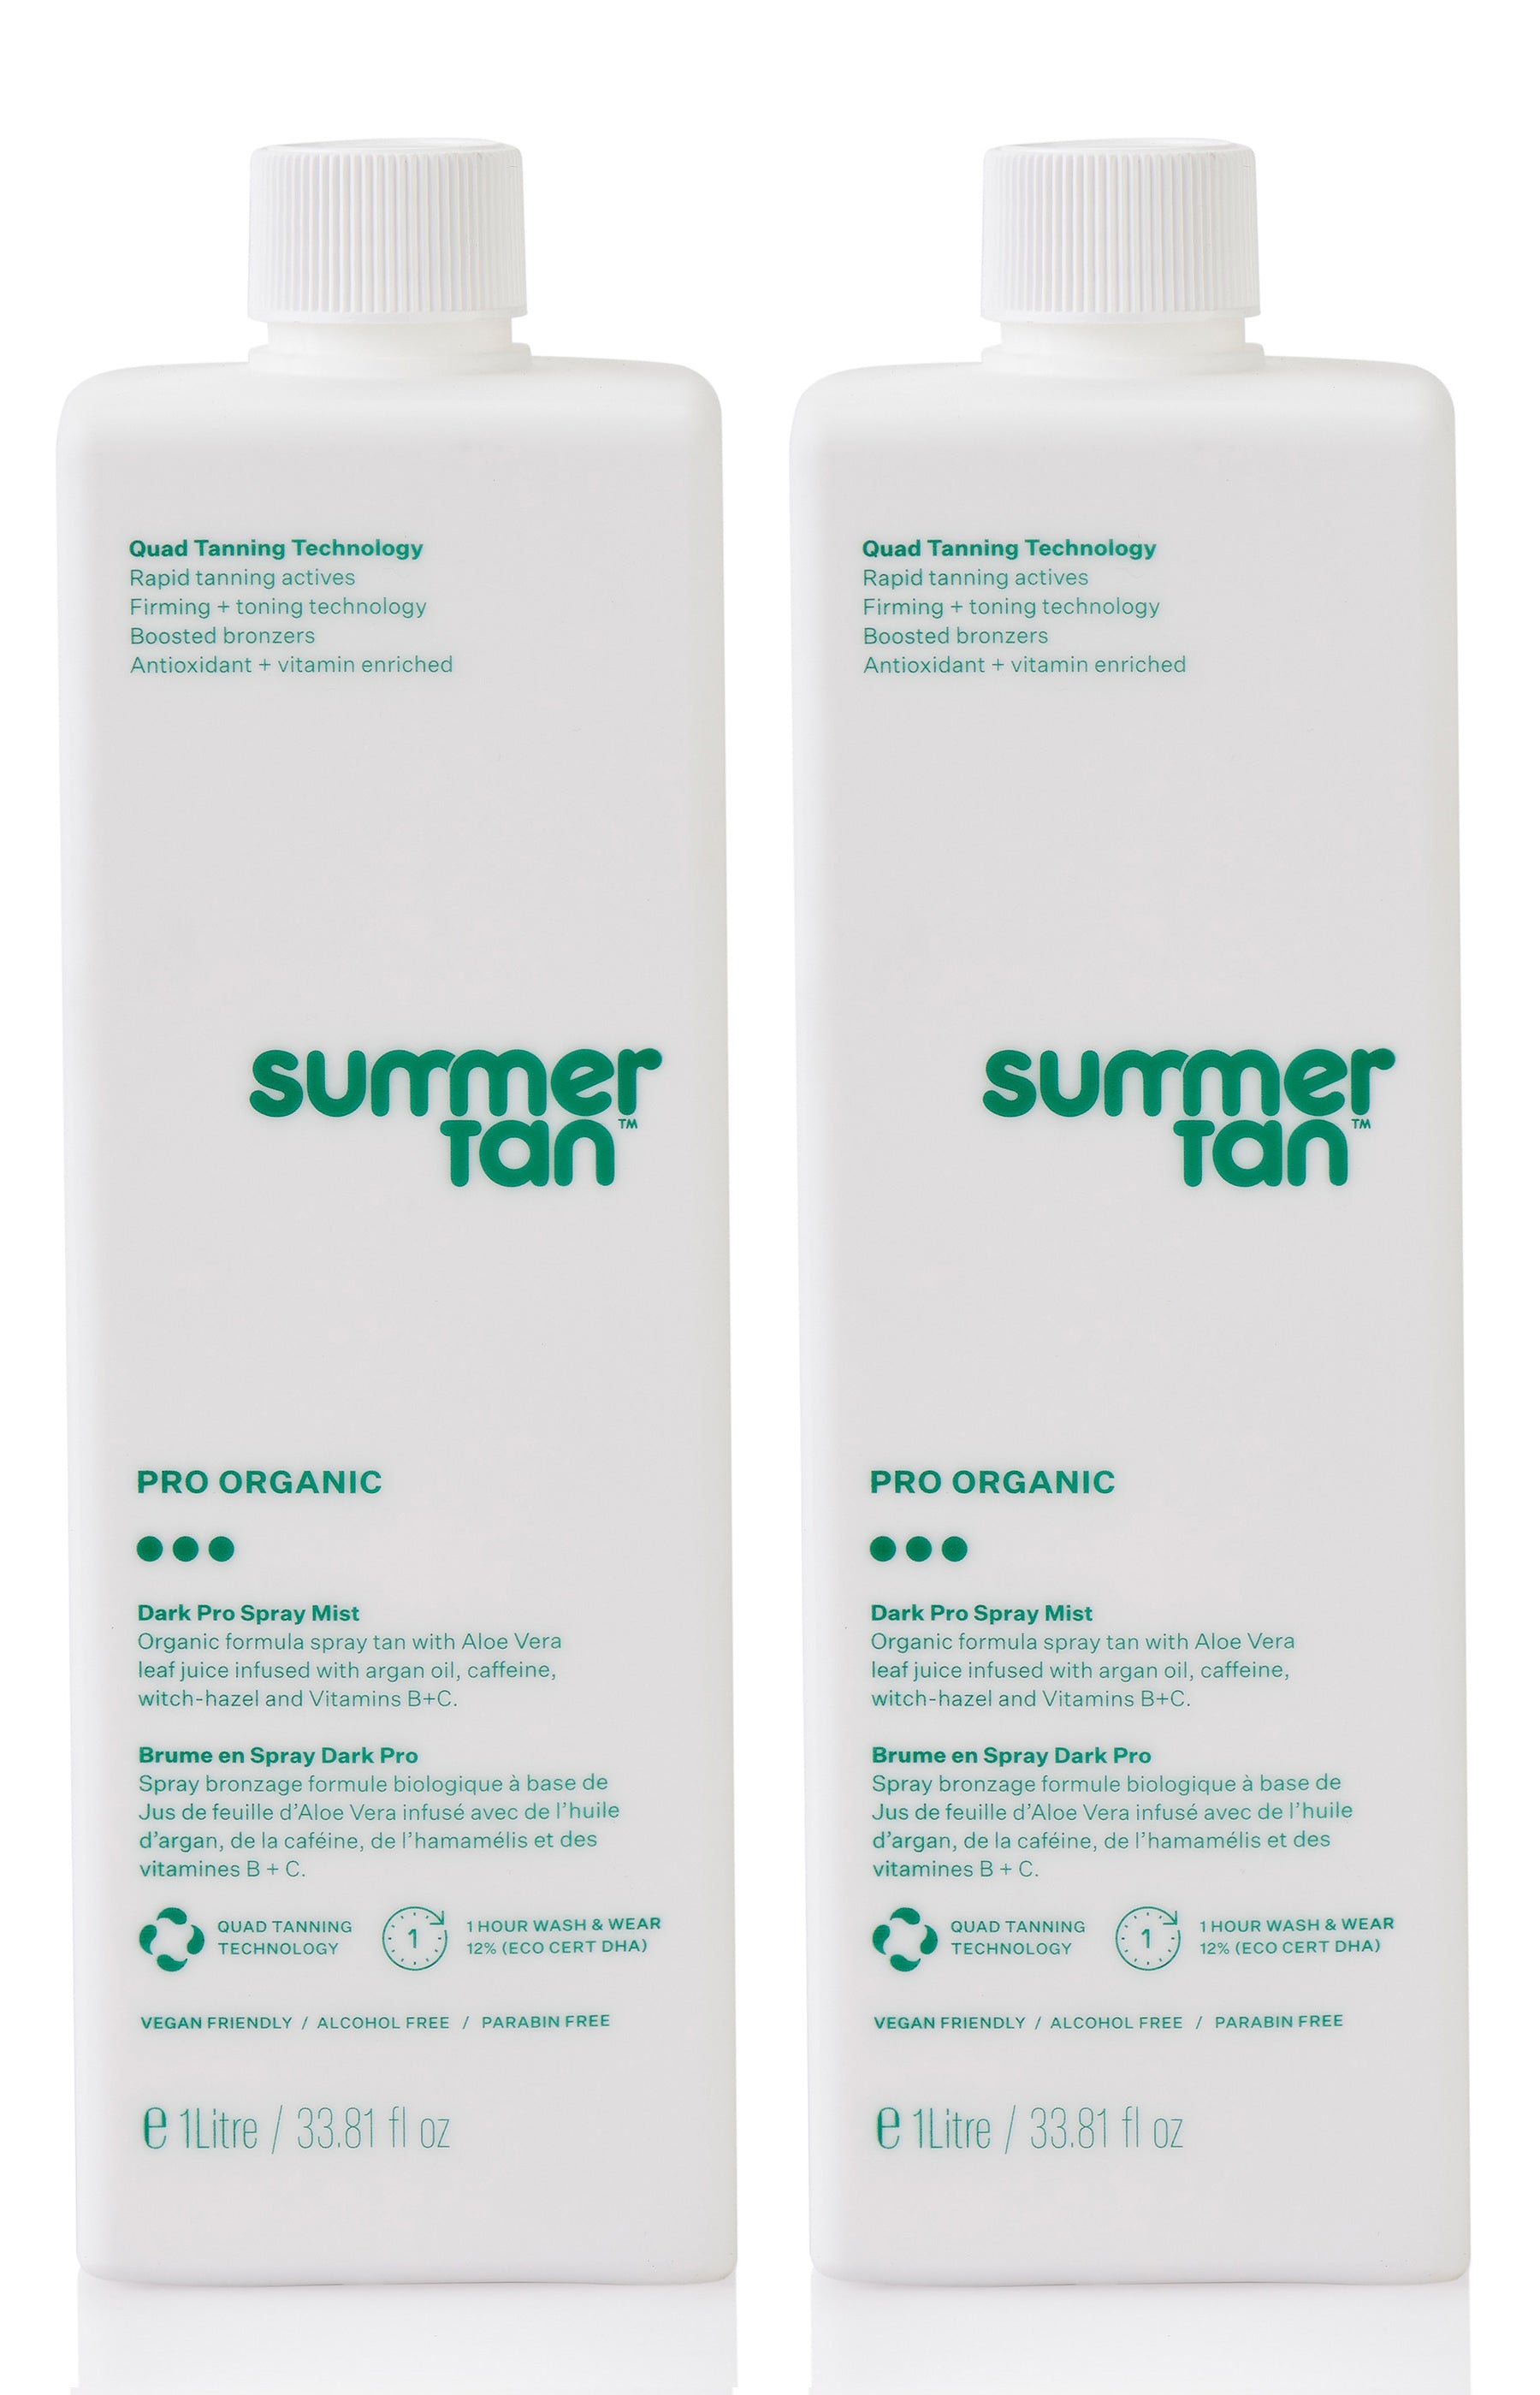 Summer Tan™ Professional Packs: Pro Organic Pro Spray Mist 2 x 1 Litre